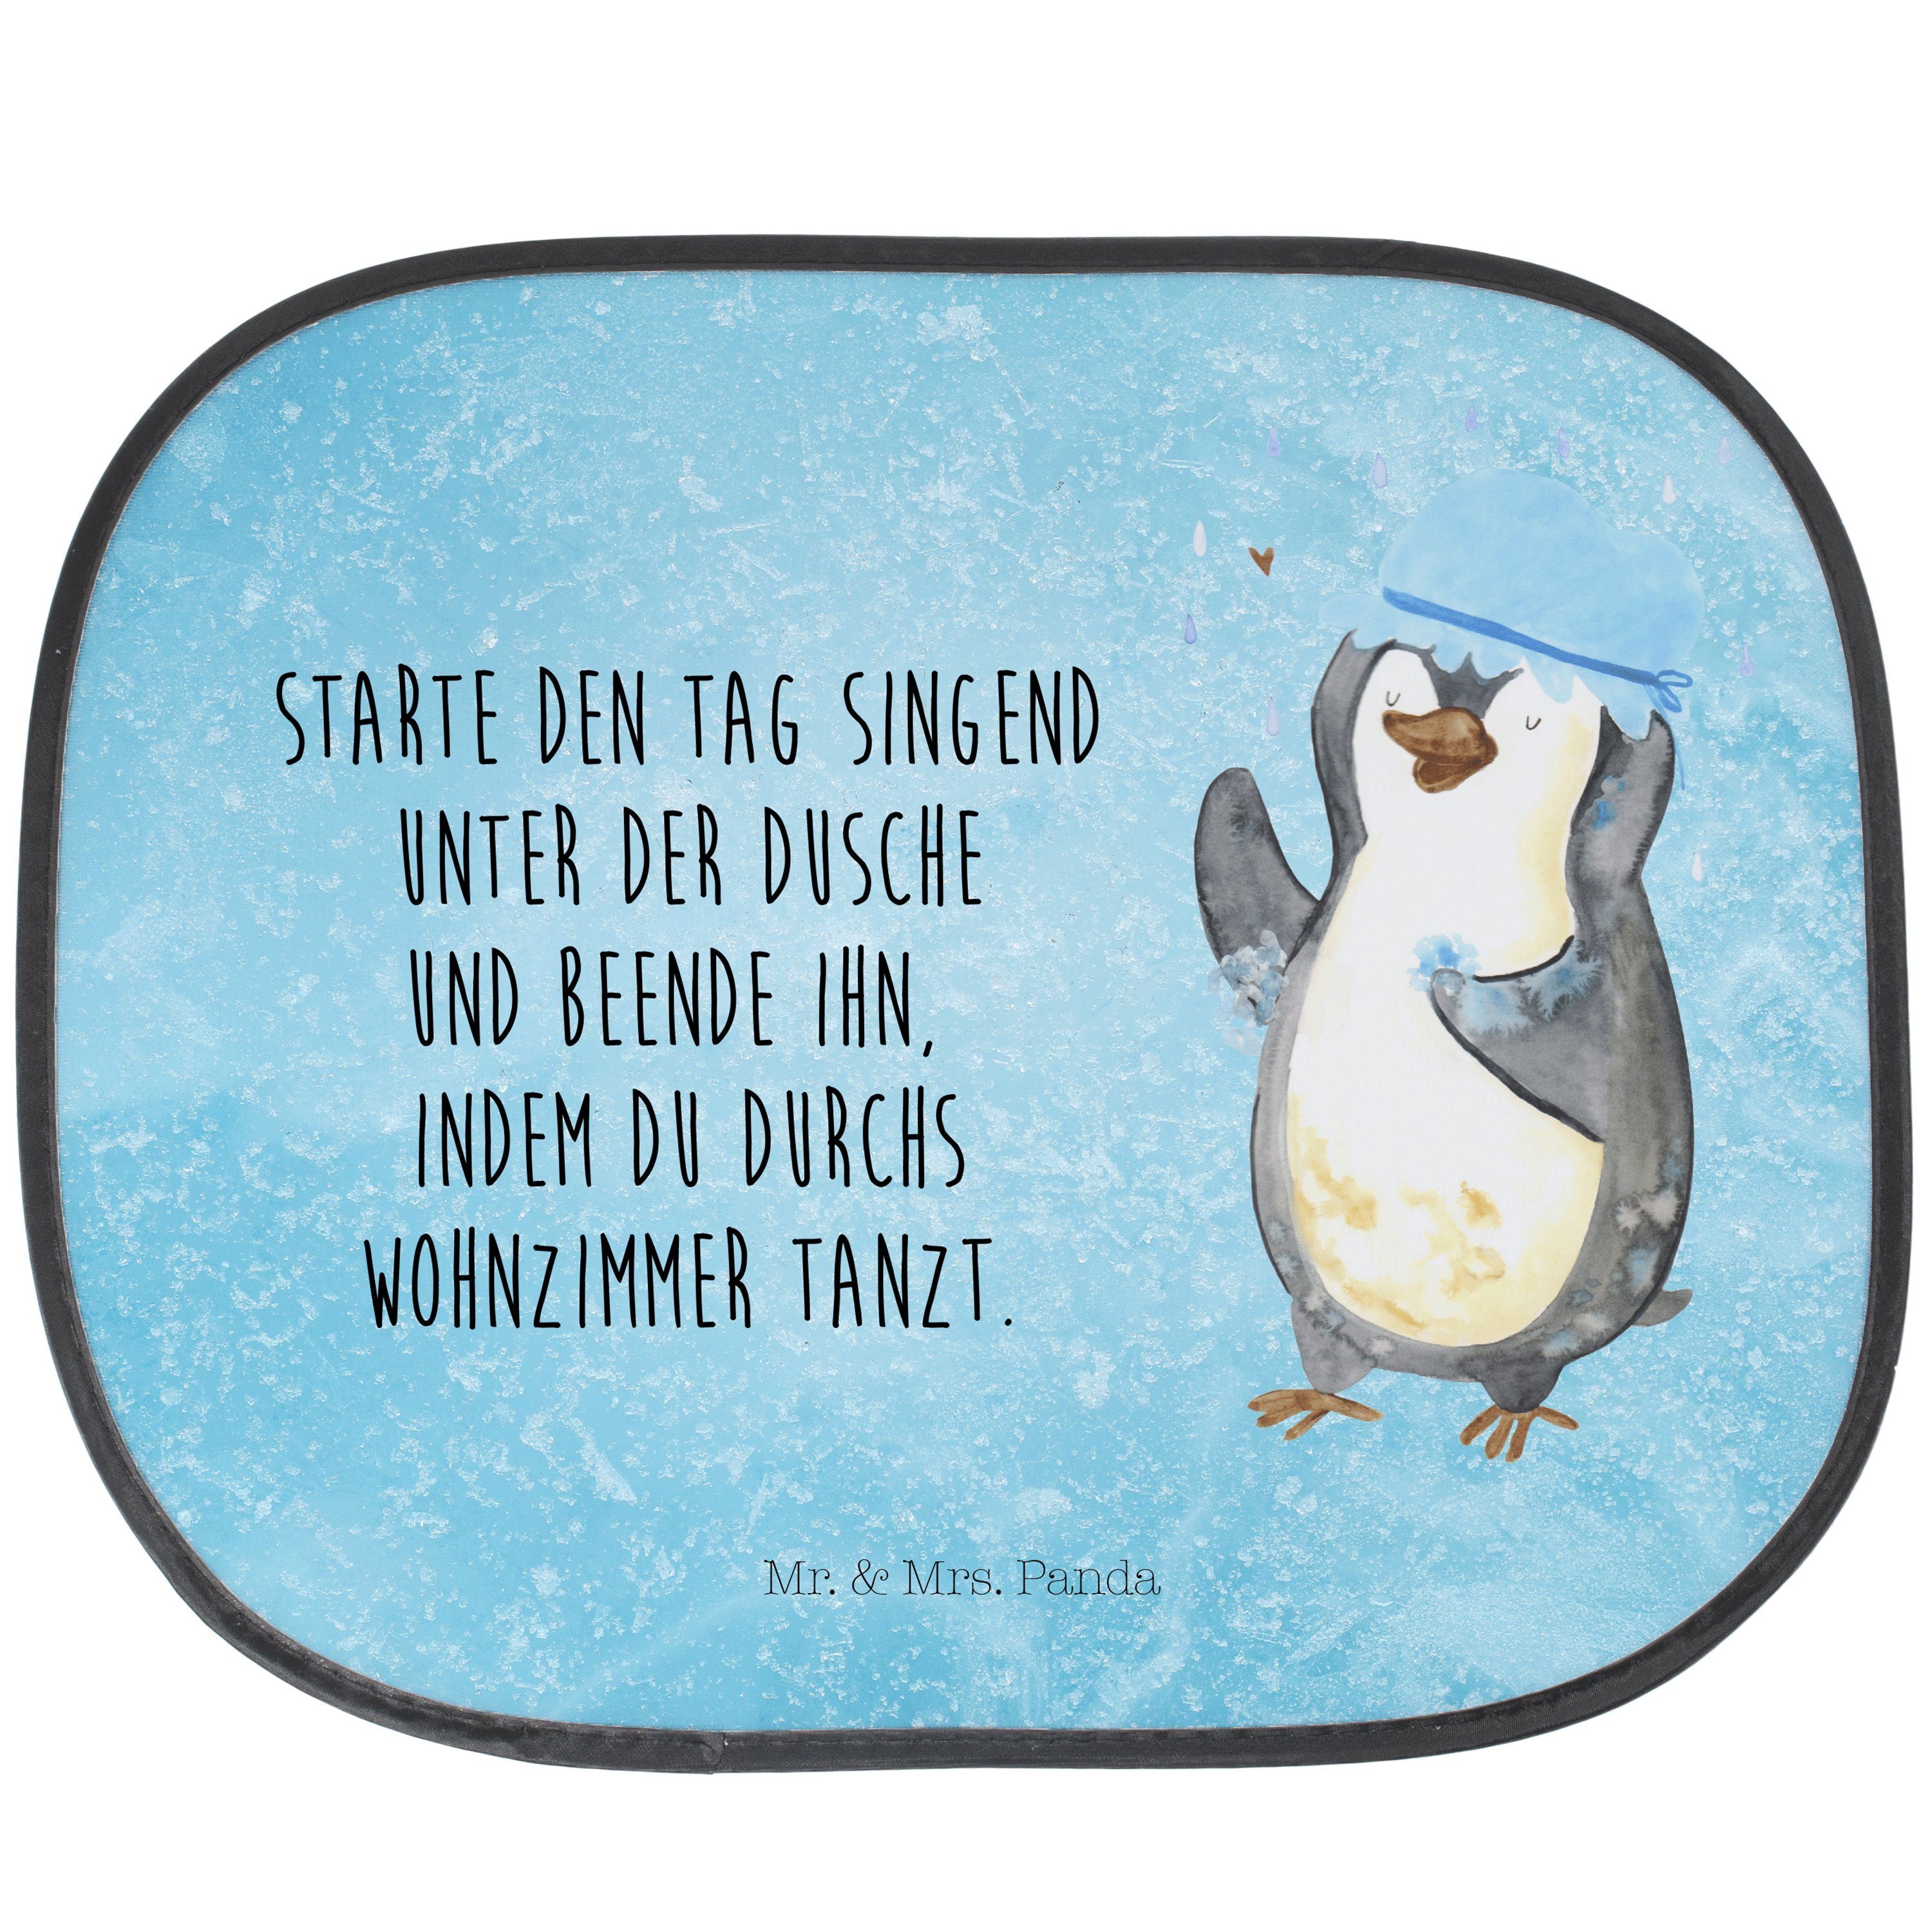 Sonnenschutz Pinguin duscht - Eisblau - Geschenk, baden, Sonne, Sonnenschutz Kinde, Mr. & Mrs. Panda, Seidenmatt